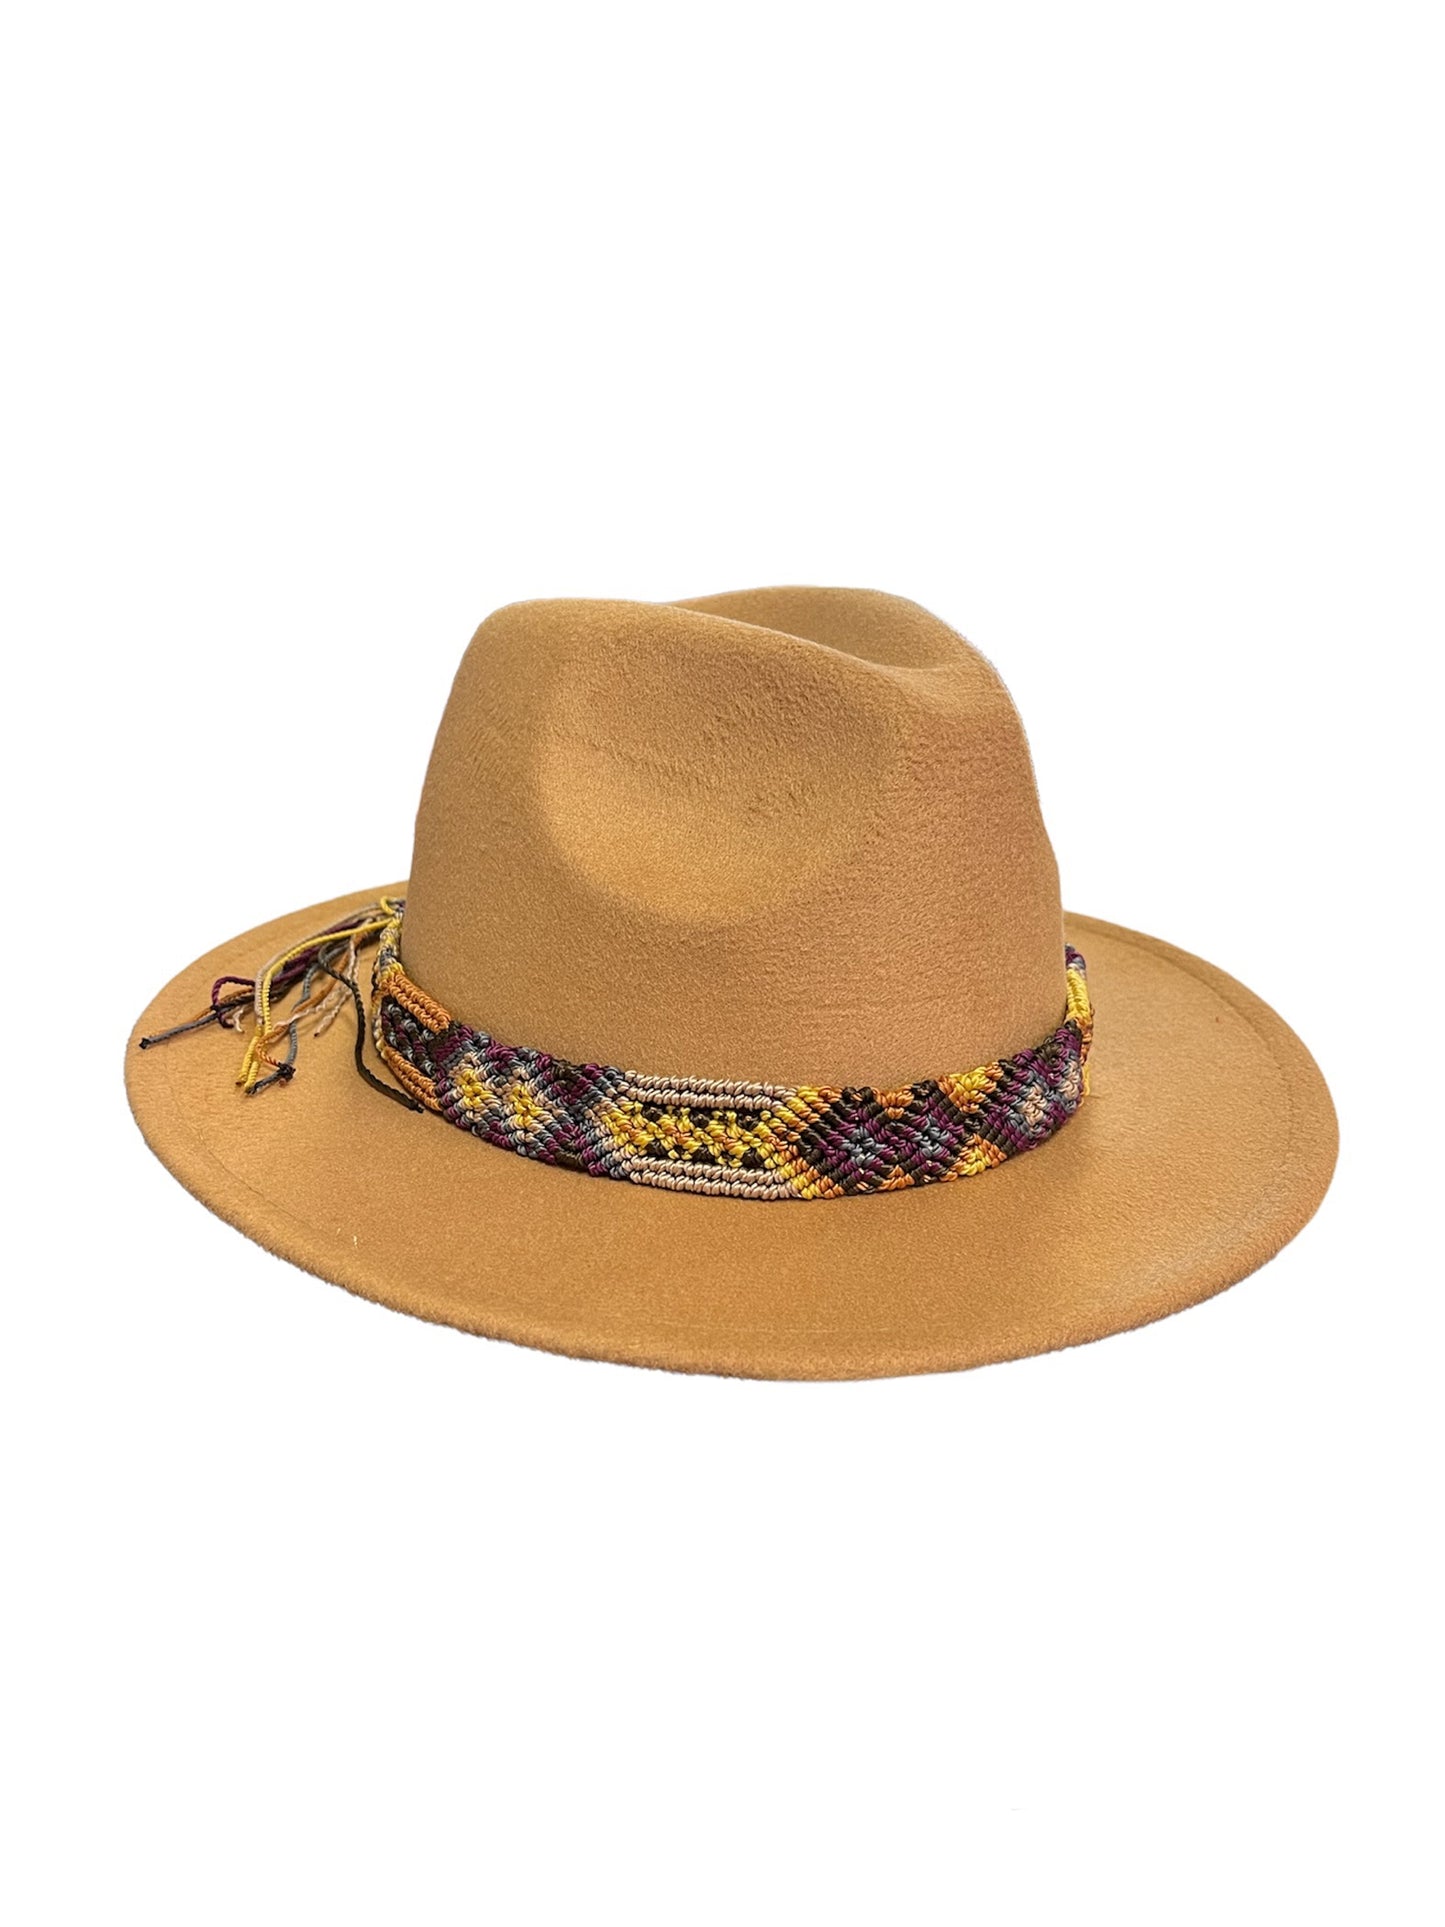 Thin Mexican Braided Hat Band-Mustard, Brown, Plum & Tan